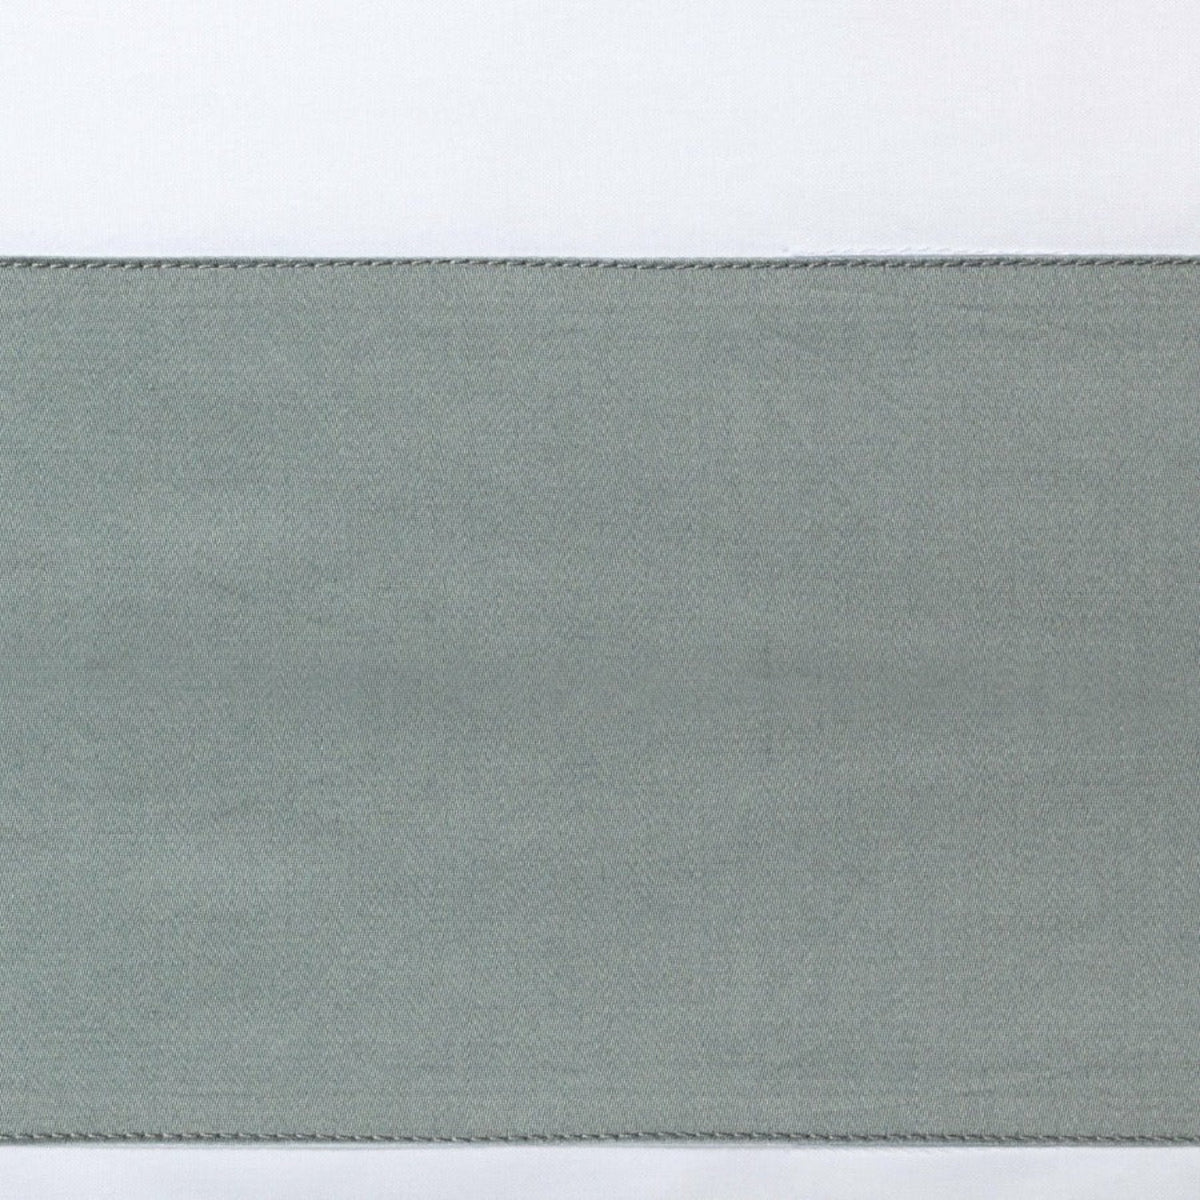 Swatch Sample of Sferra Casida Bedding in Color White/Seagreen